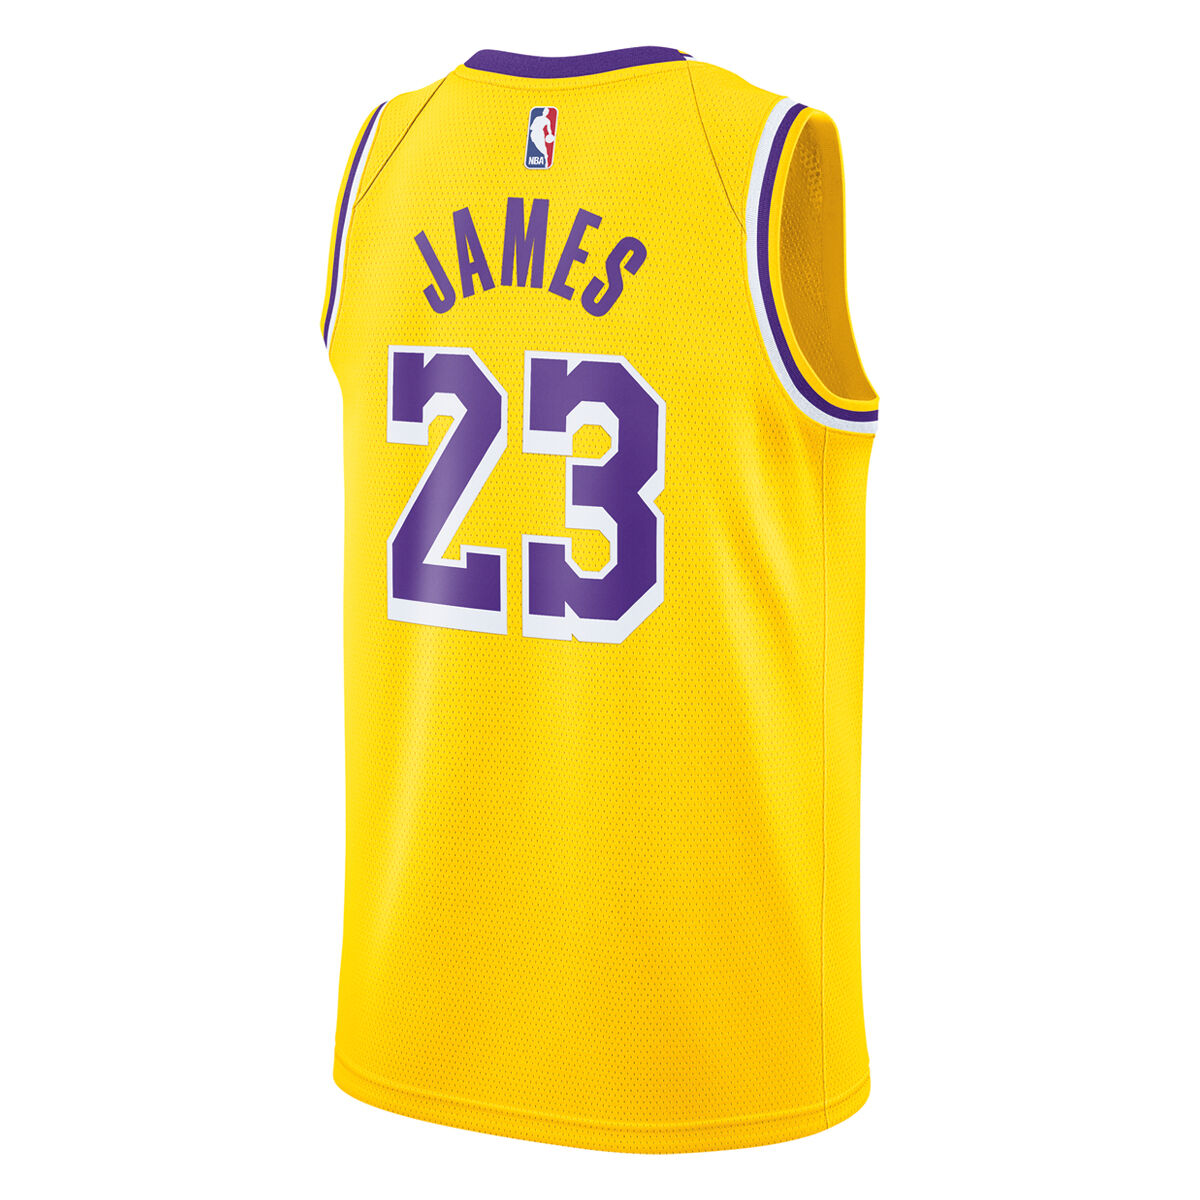 James #23 Los Angeles Lakers Basketball Jersey Shirt Yellow/Purple/White S XXL 